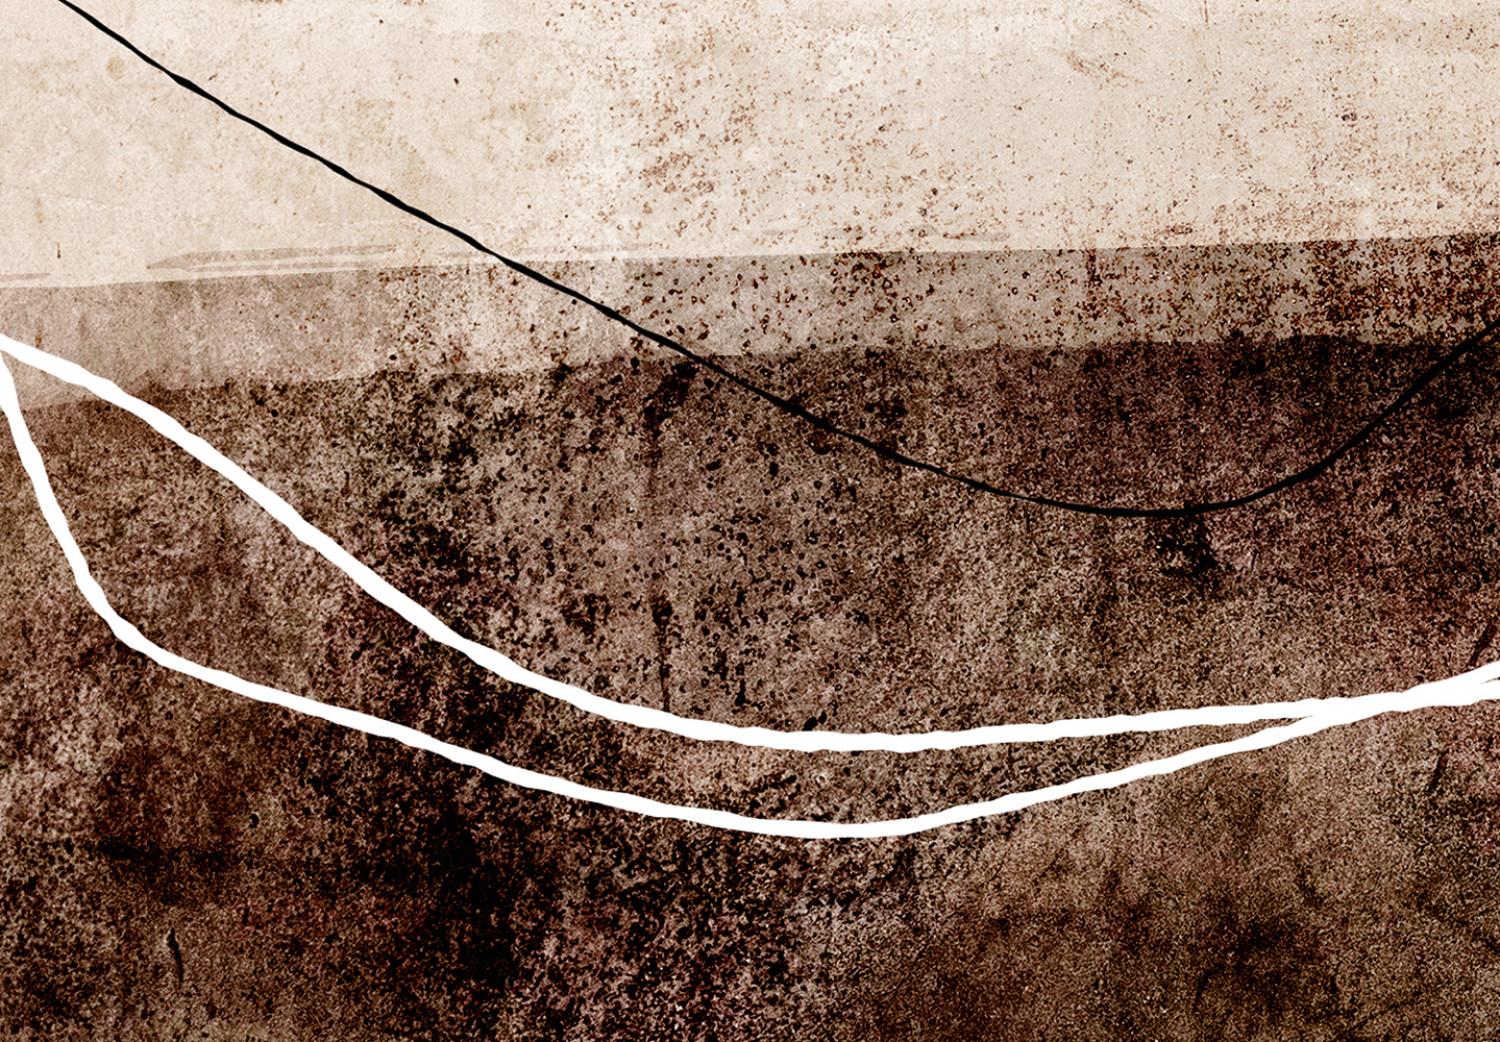 Canvas Rotational Motion (1-piece) Vertical - figure line art in a boho motif